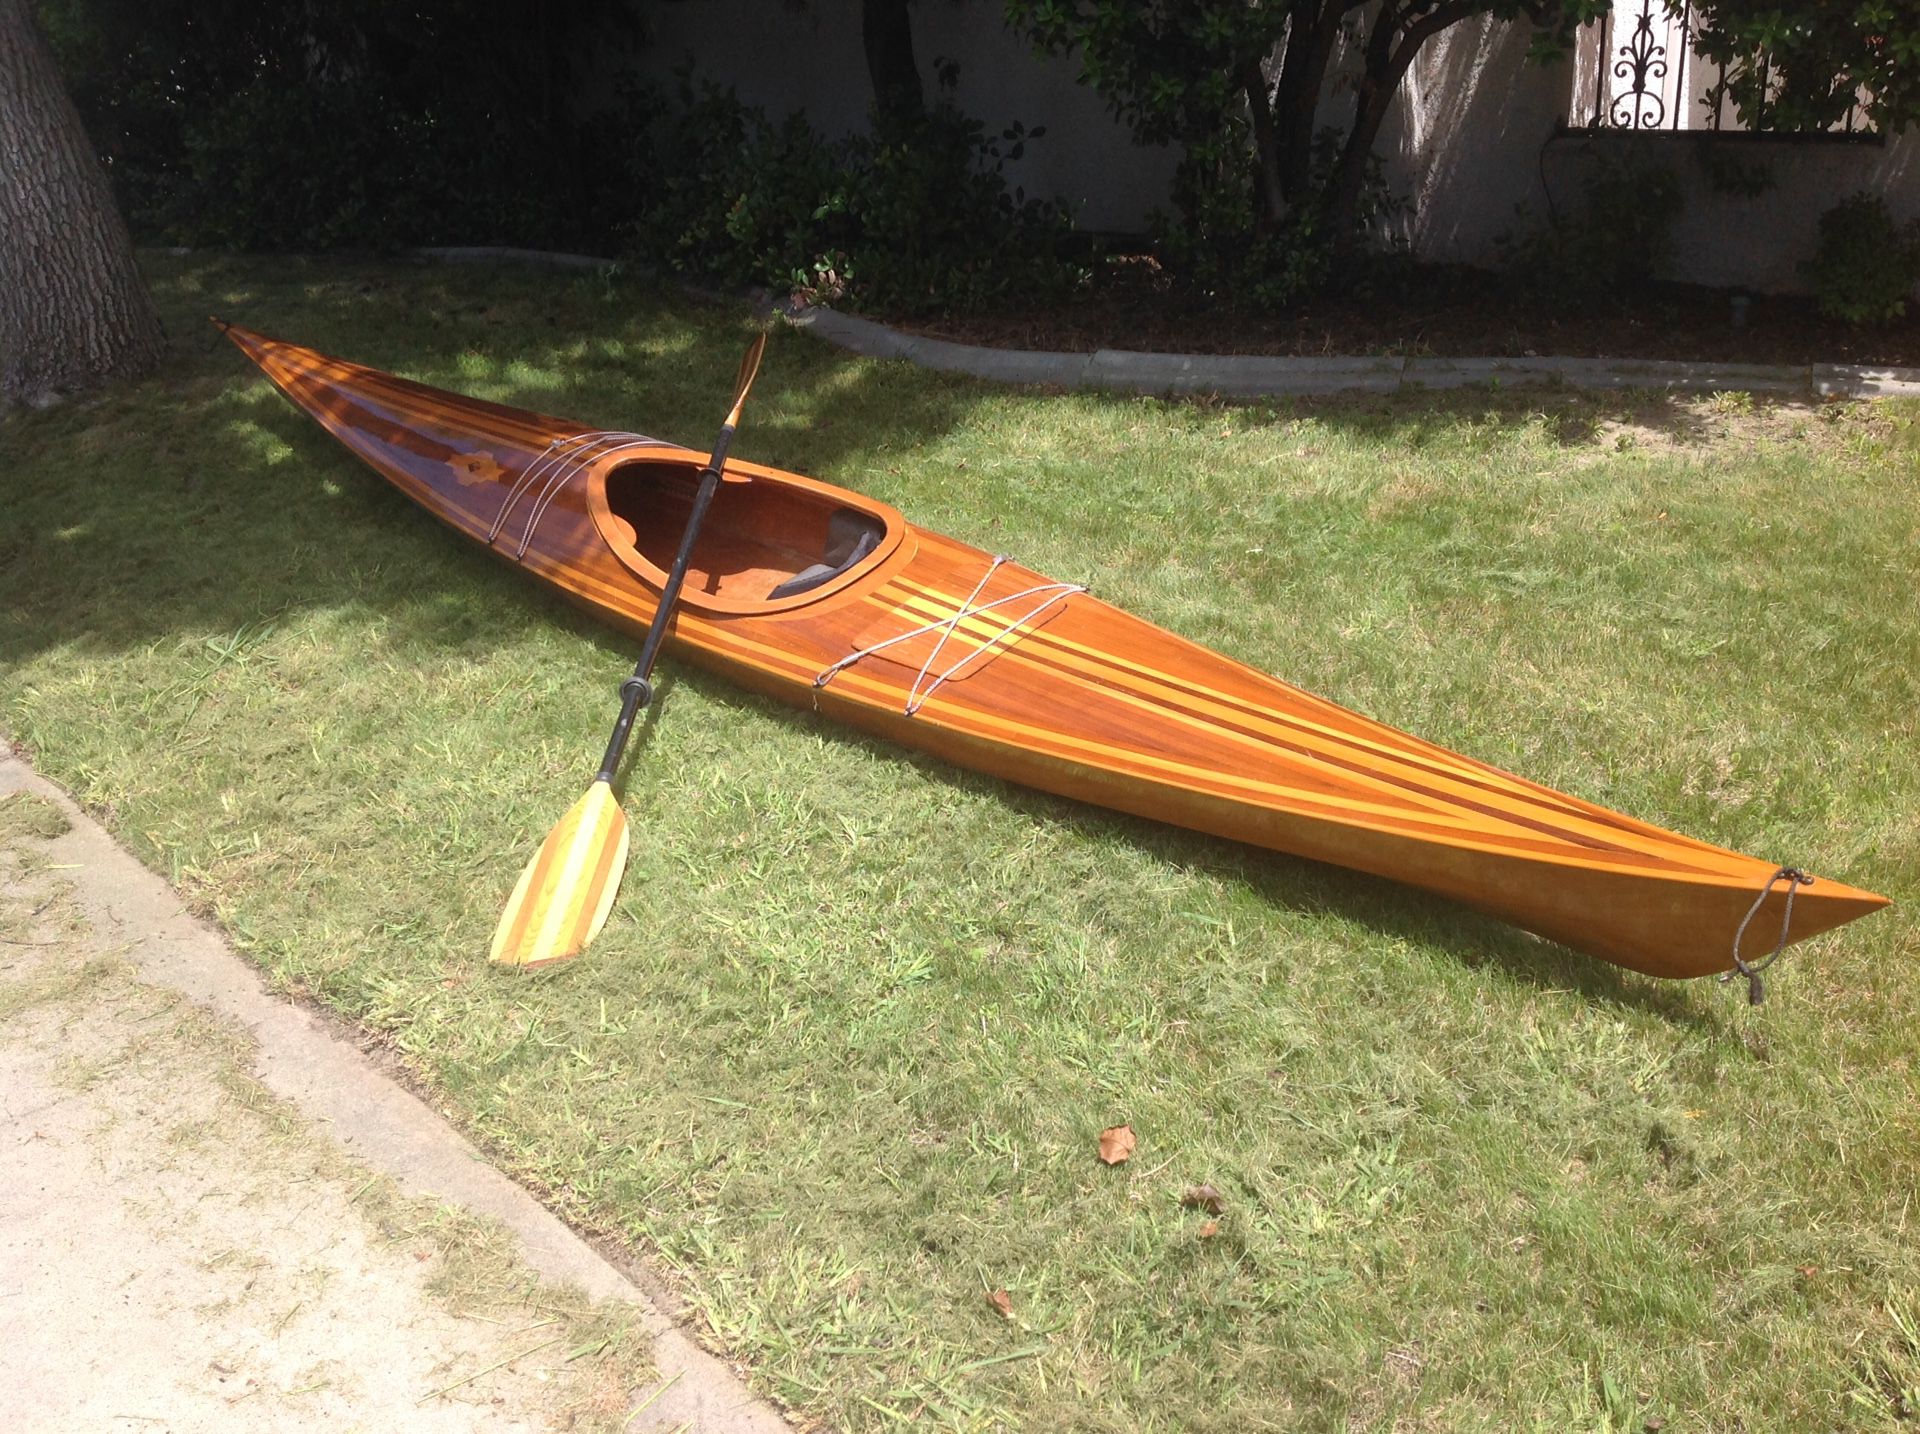 Wooden kayak 17' long, 22" wide